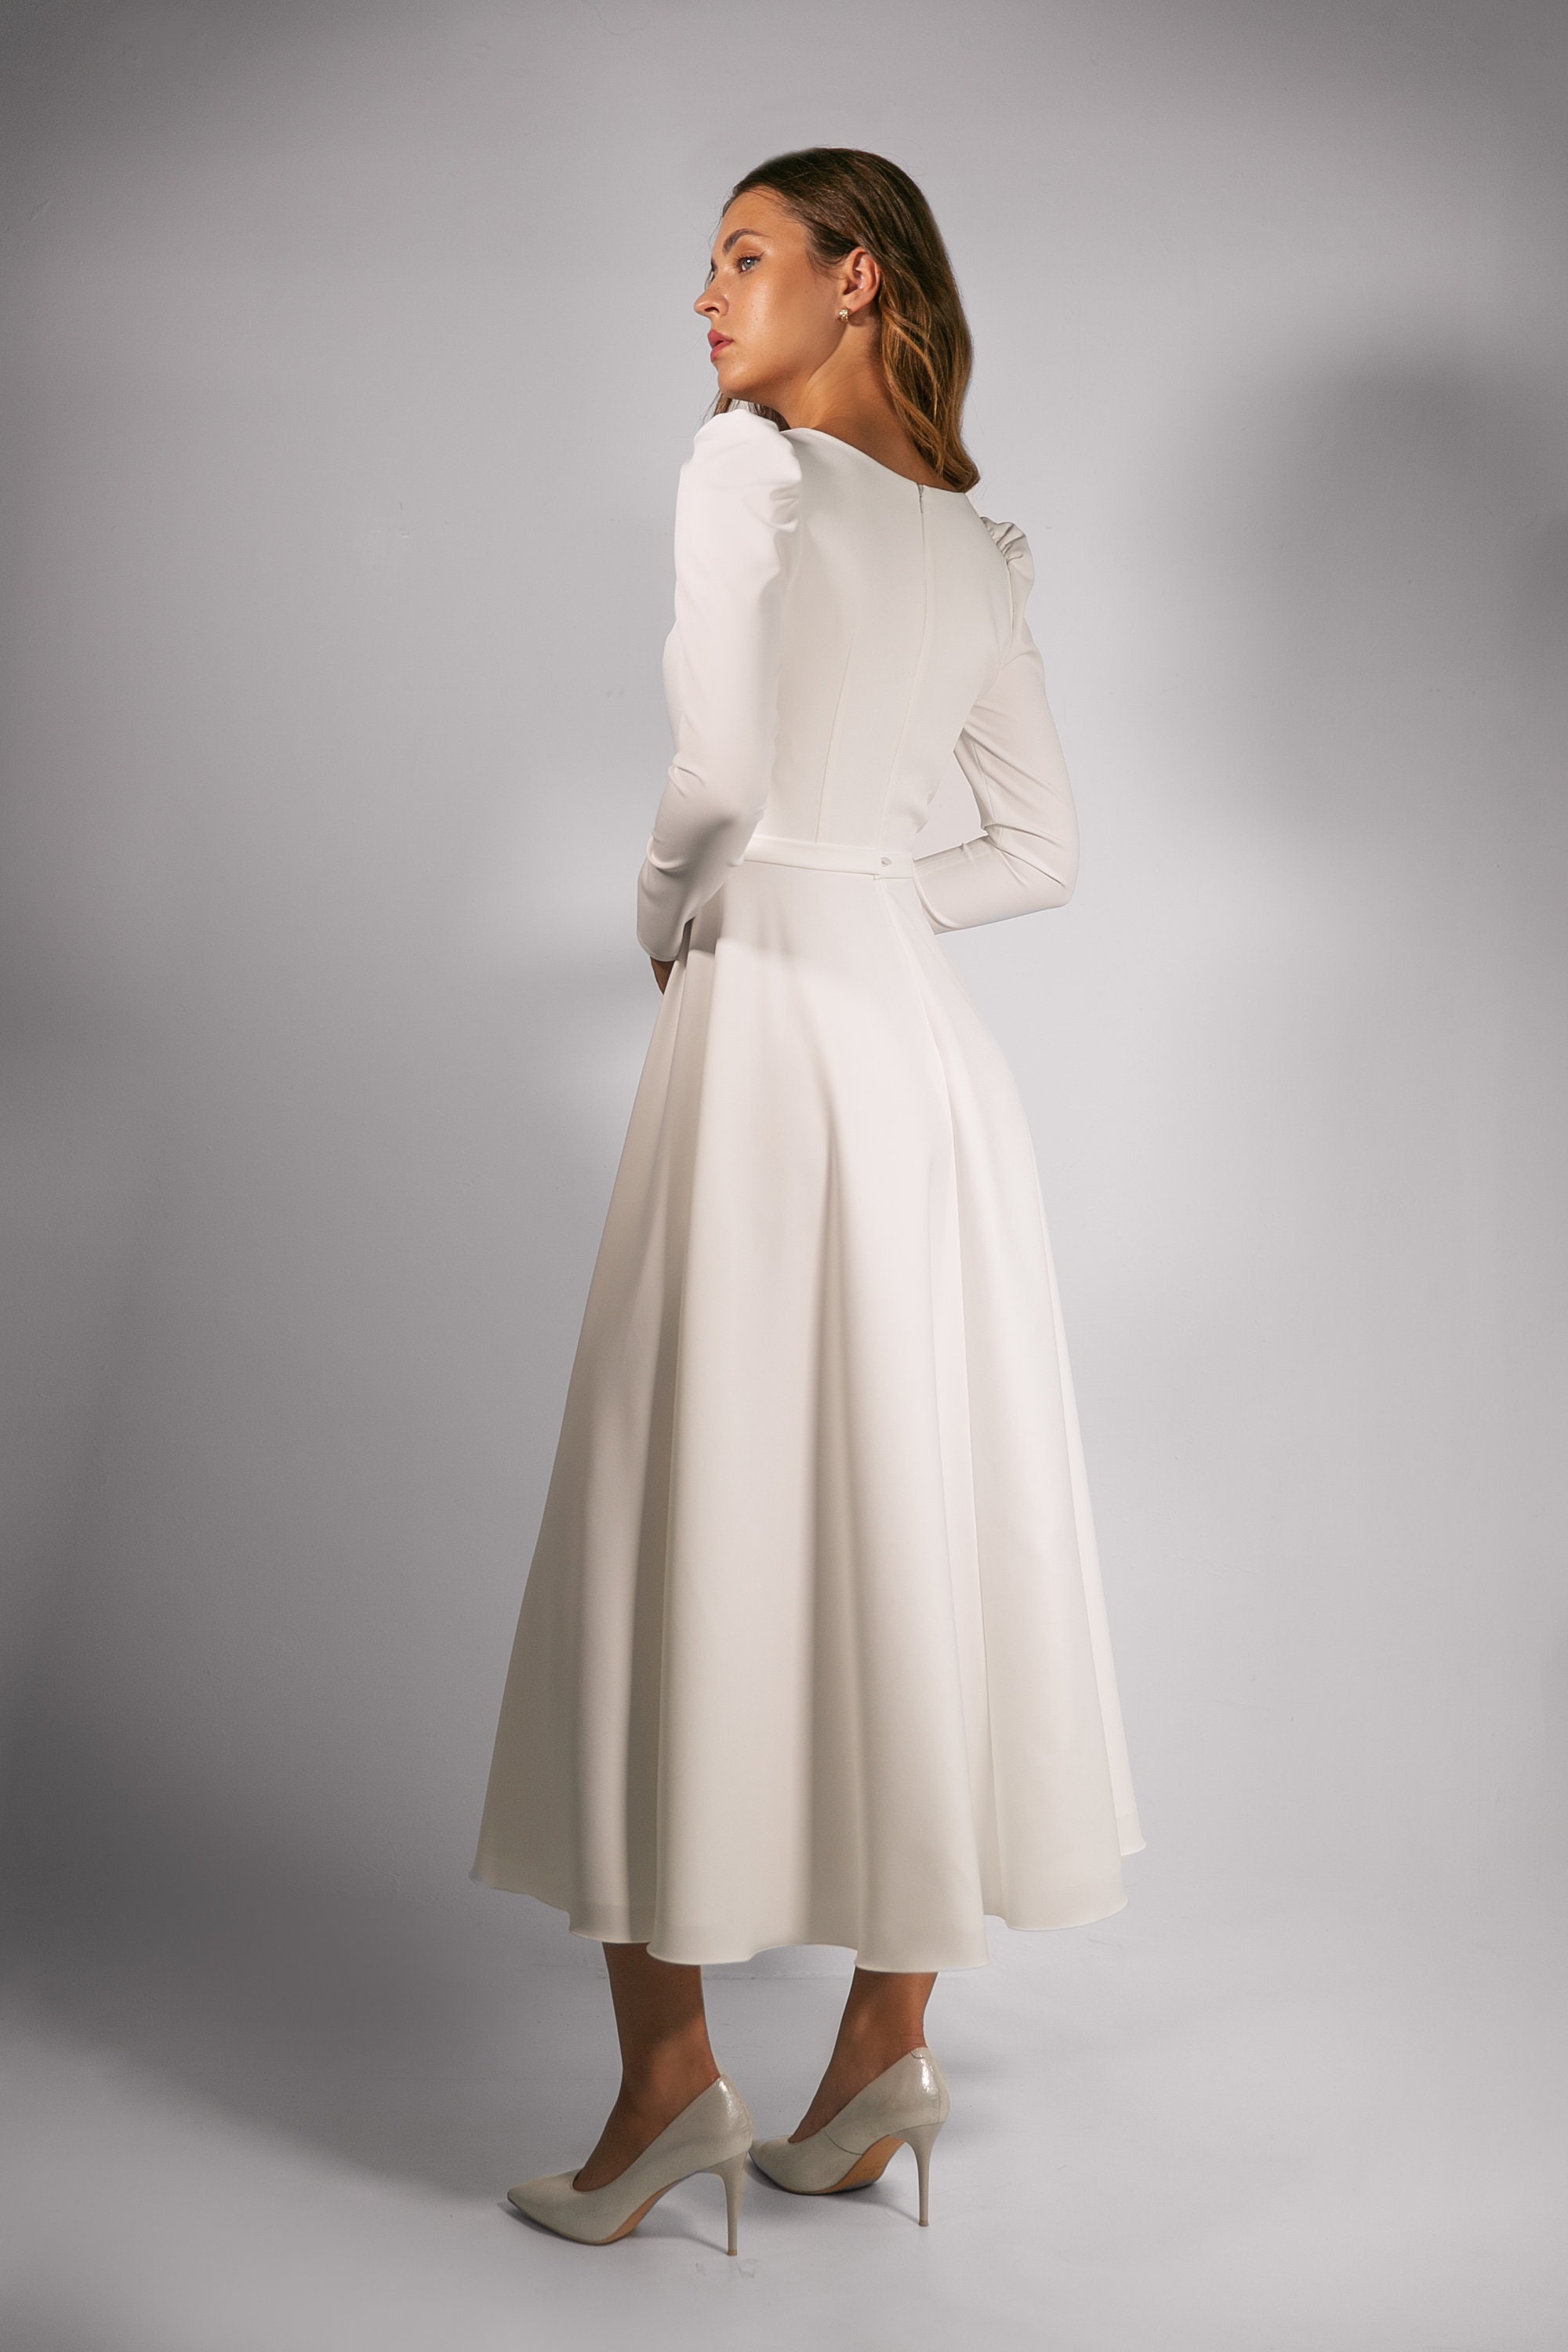 Modest Wedding Dress CAMILLA MIDI. Winter Wedding Dress Long | Etsy UK